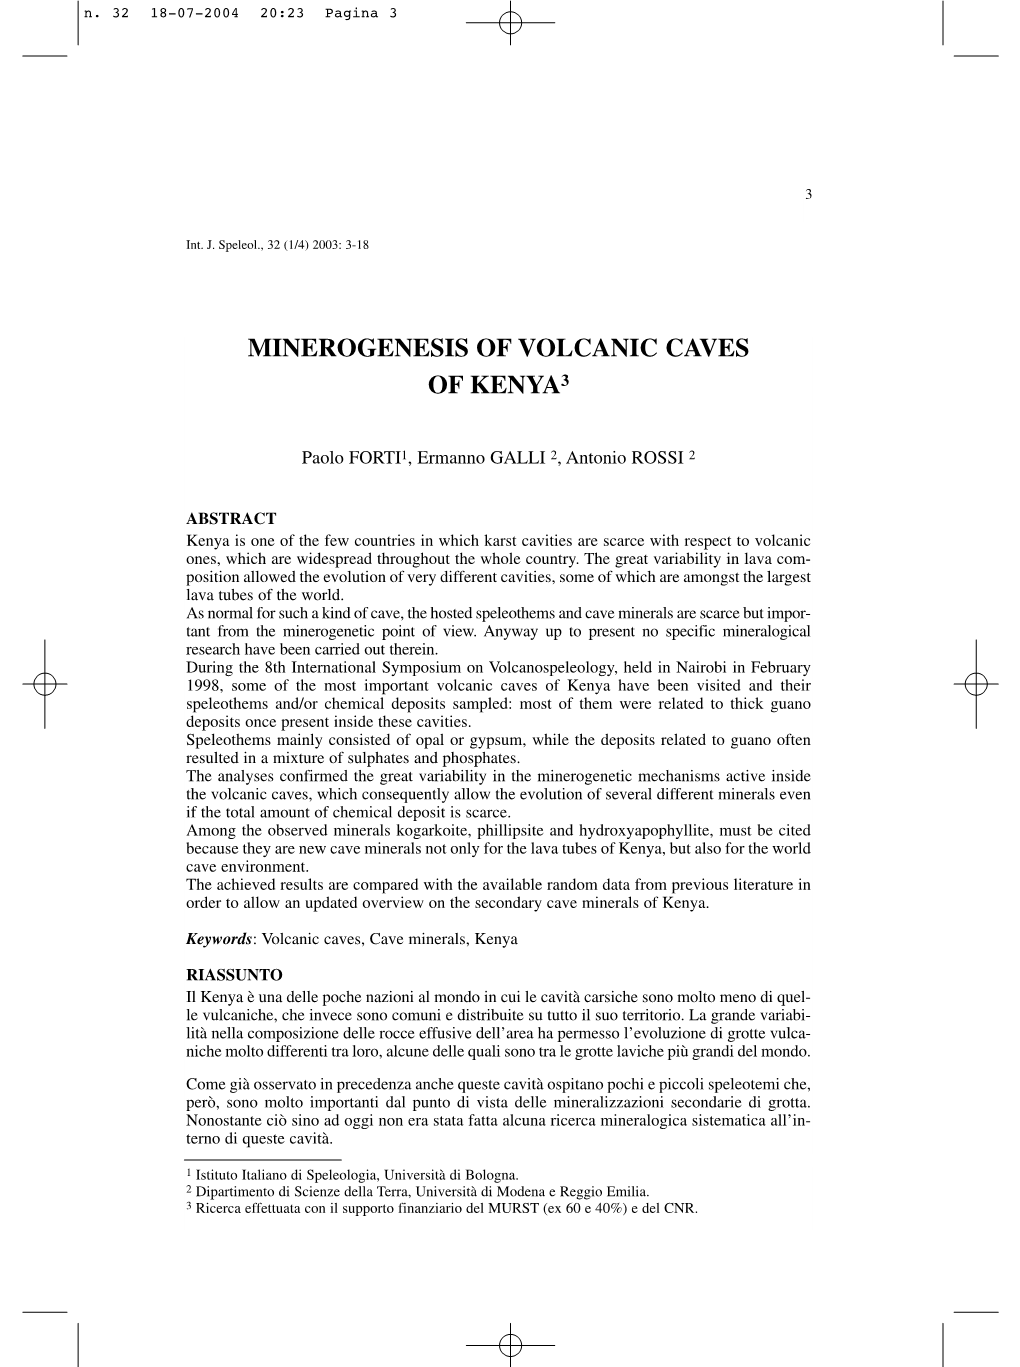 Minerogenesis of Volcanic Caves of Kenya3